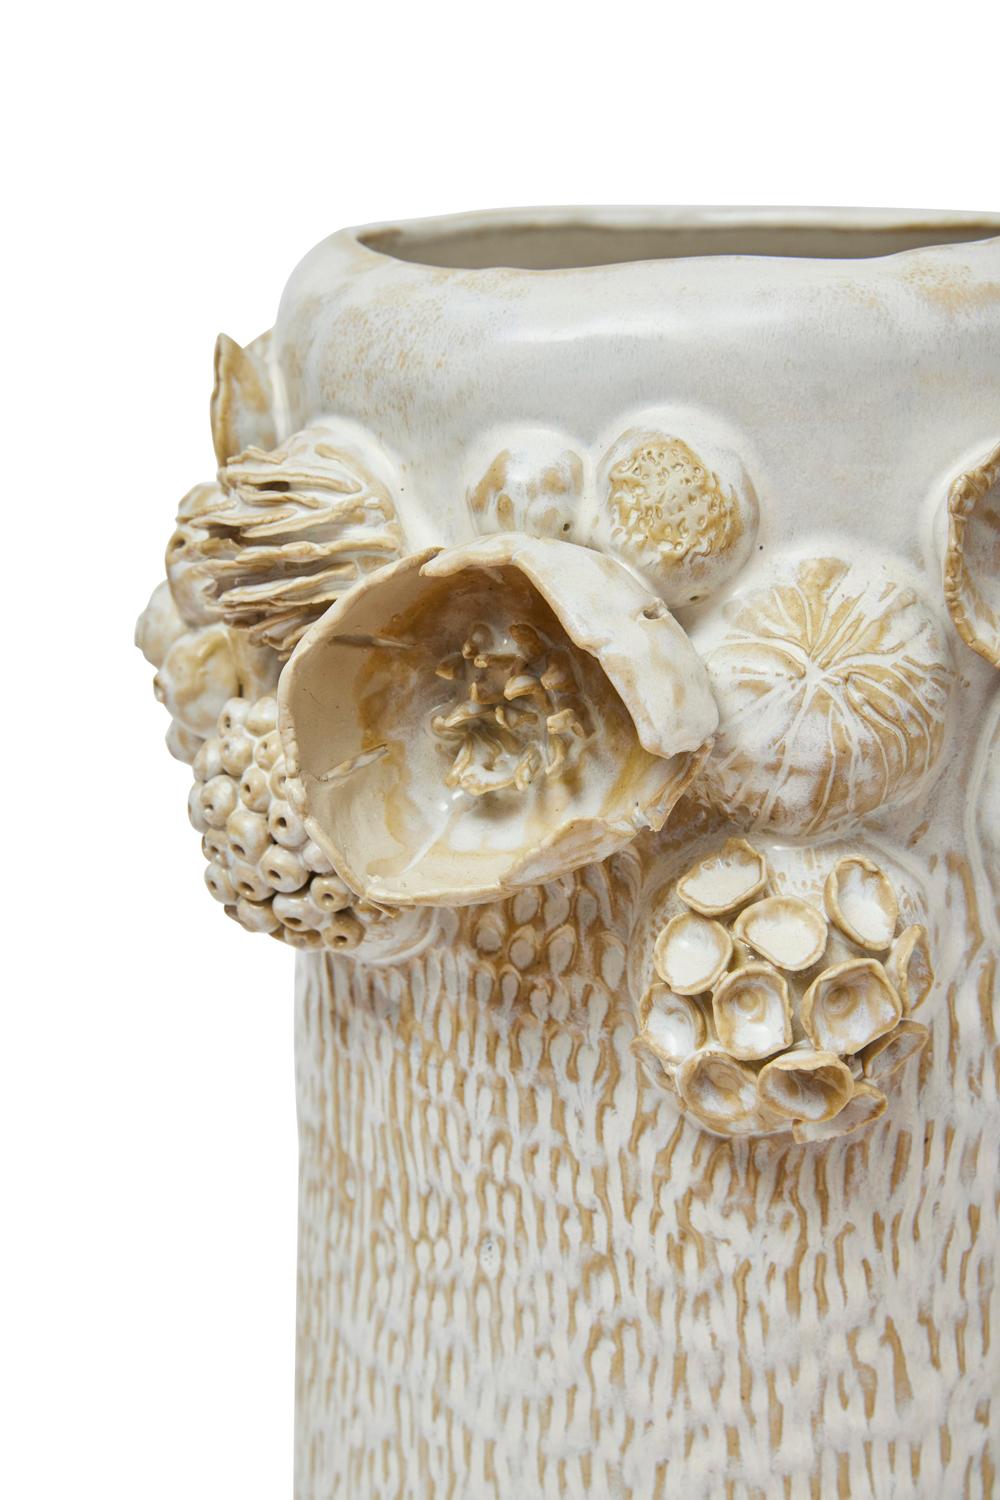 Trish DeMasi
Botanica vessel II, 2021
Glazed ceramic
Measures: 14.75 x 11 x 10.5 in.